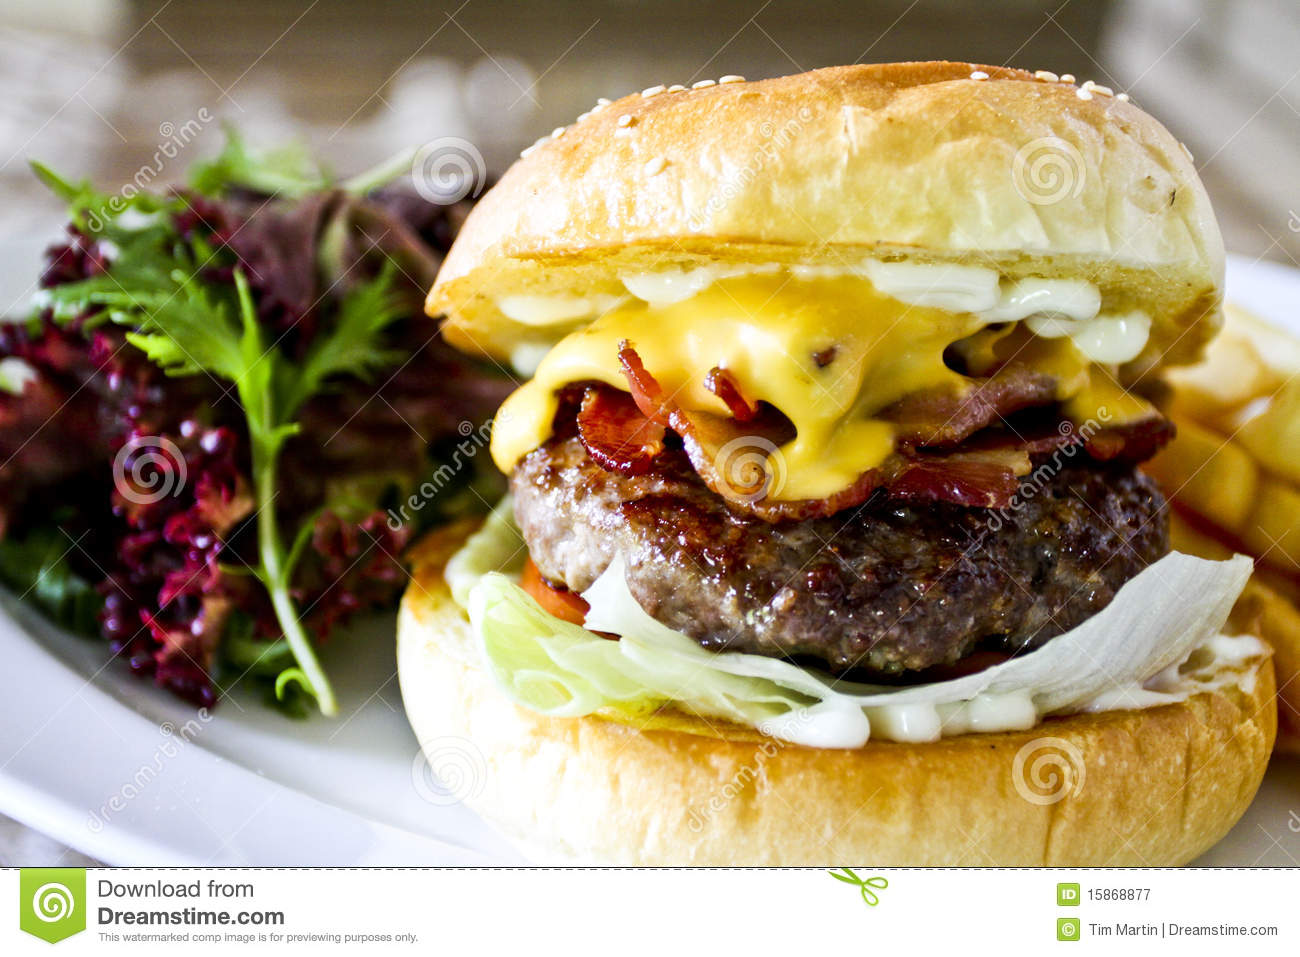 Bacon Cheeseburger Royalty Free Stock Photography   Image  15868877